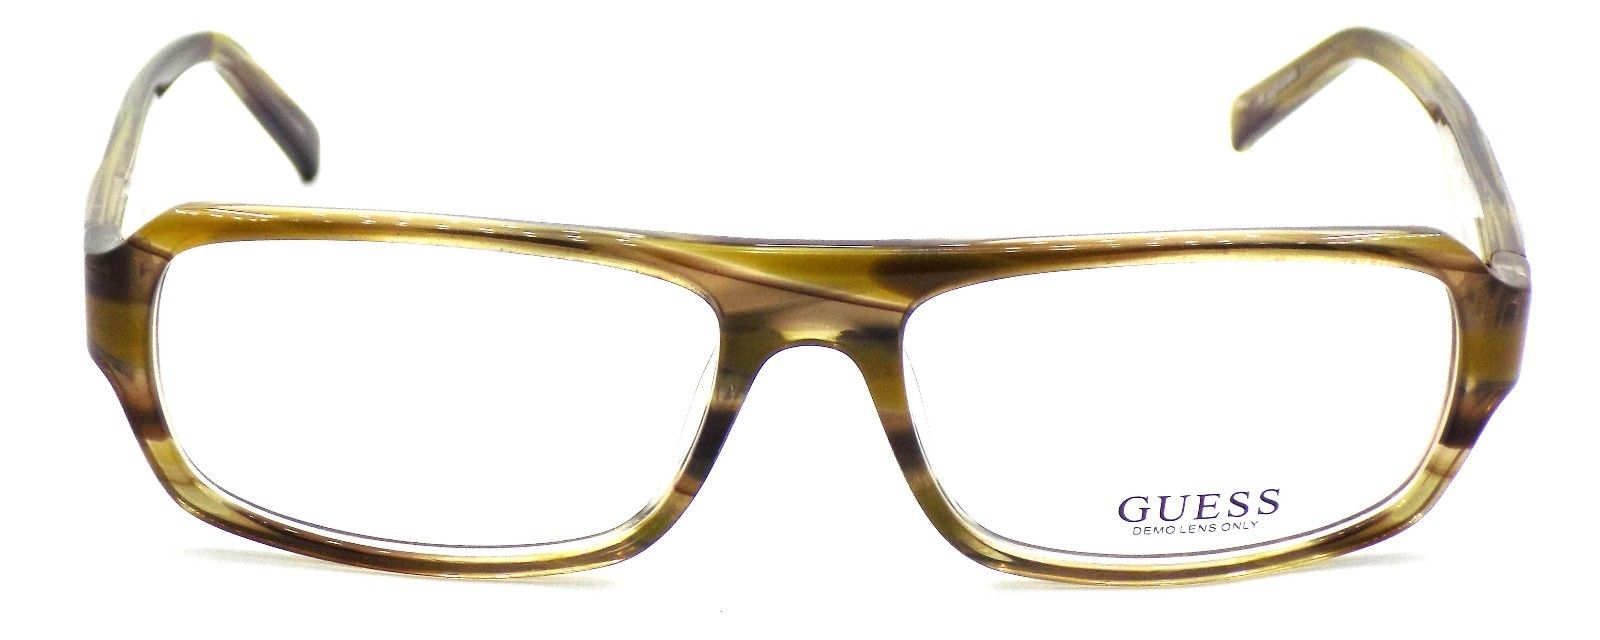 2-GUESS GU1747 BRN Men's Eyeglasses Frames 55-16-140 Brown Horn + Case-715583507142-IKSpecs